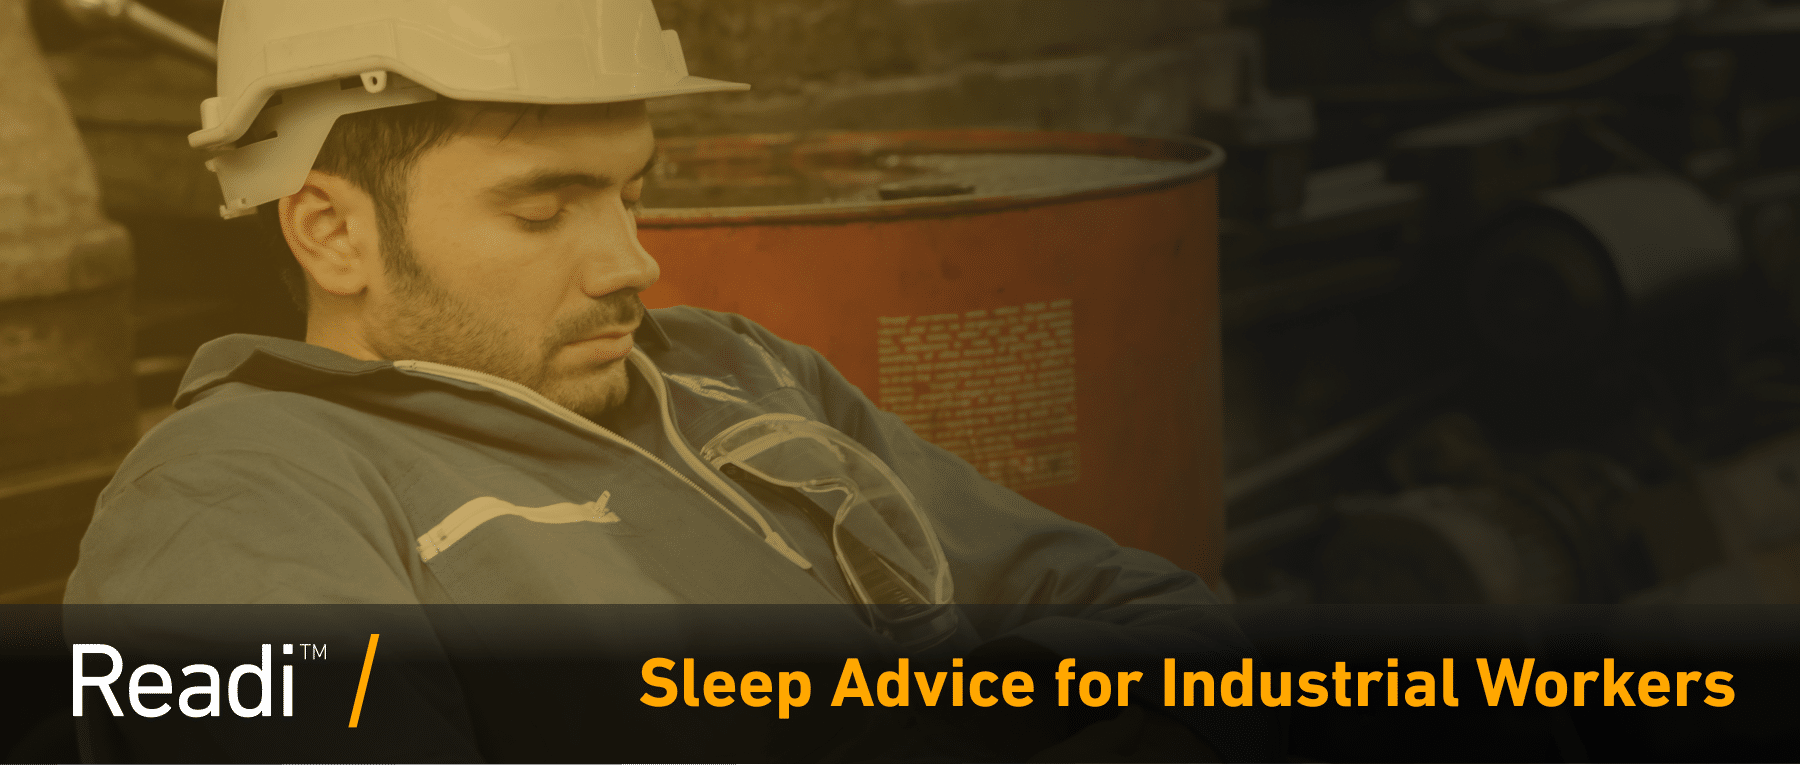 Industrial worker sleeping on the job